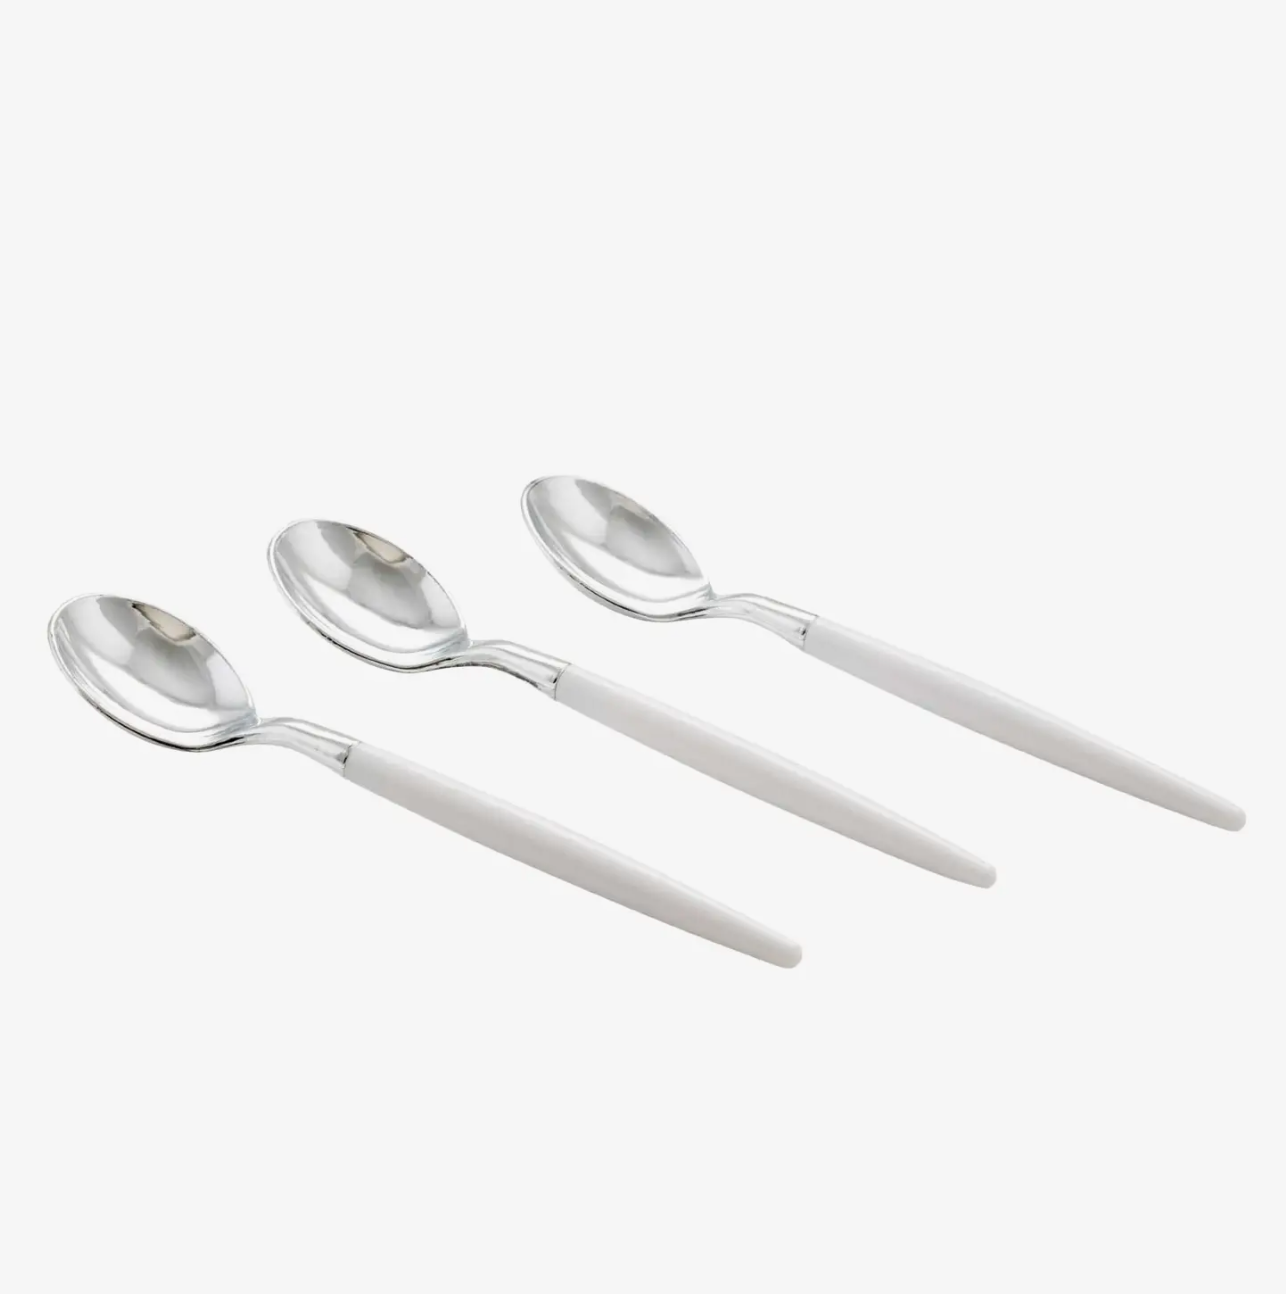 White Silver Plastic Mini Spoons | 20 Spoons